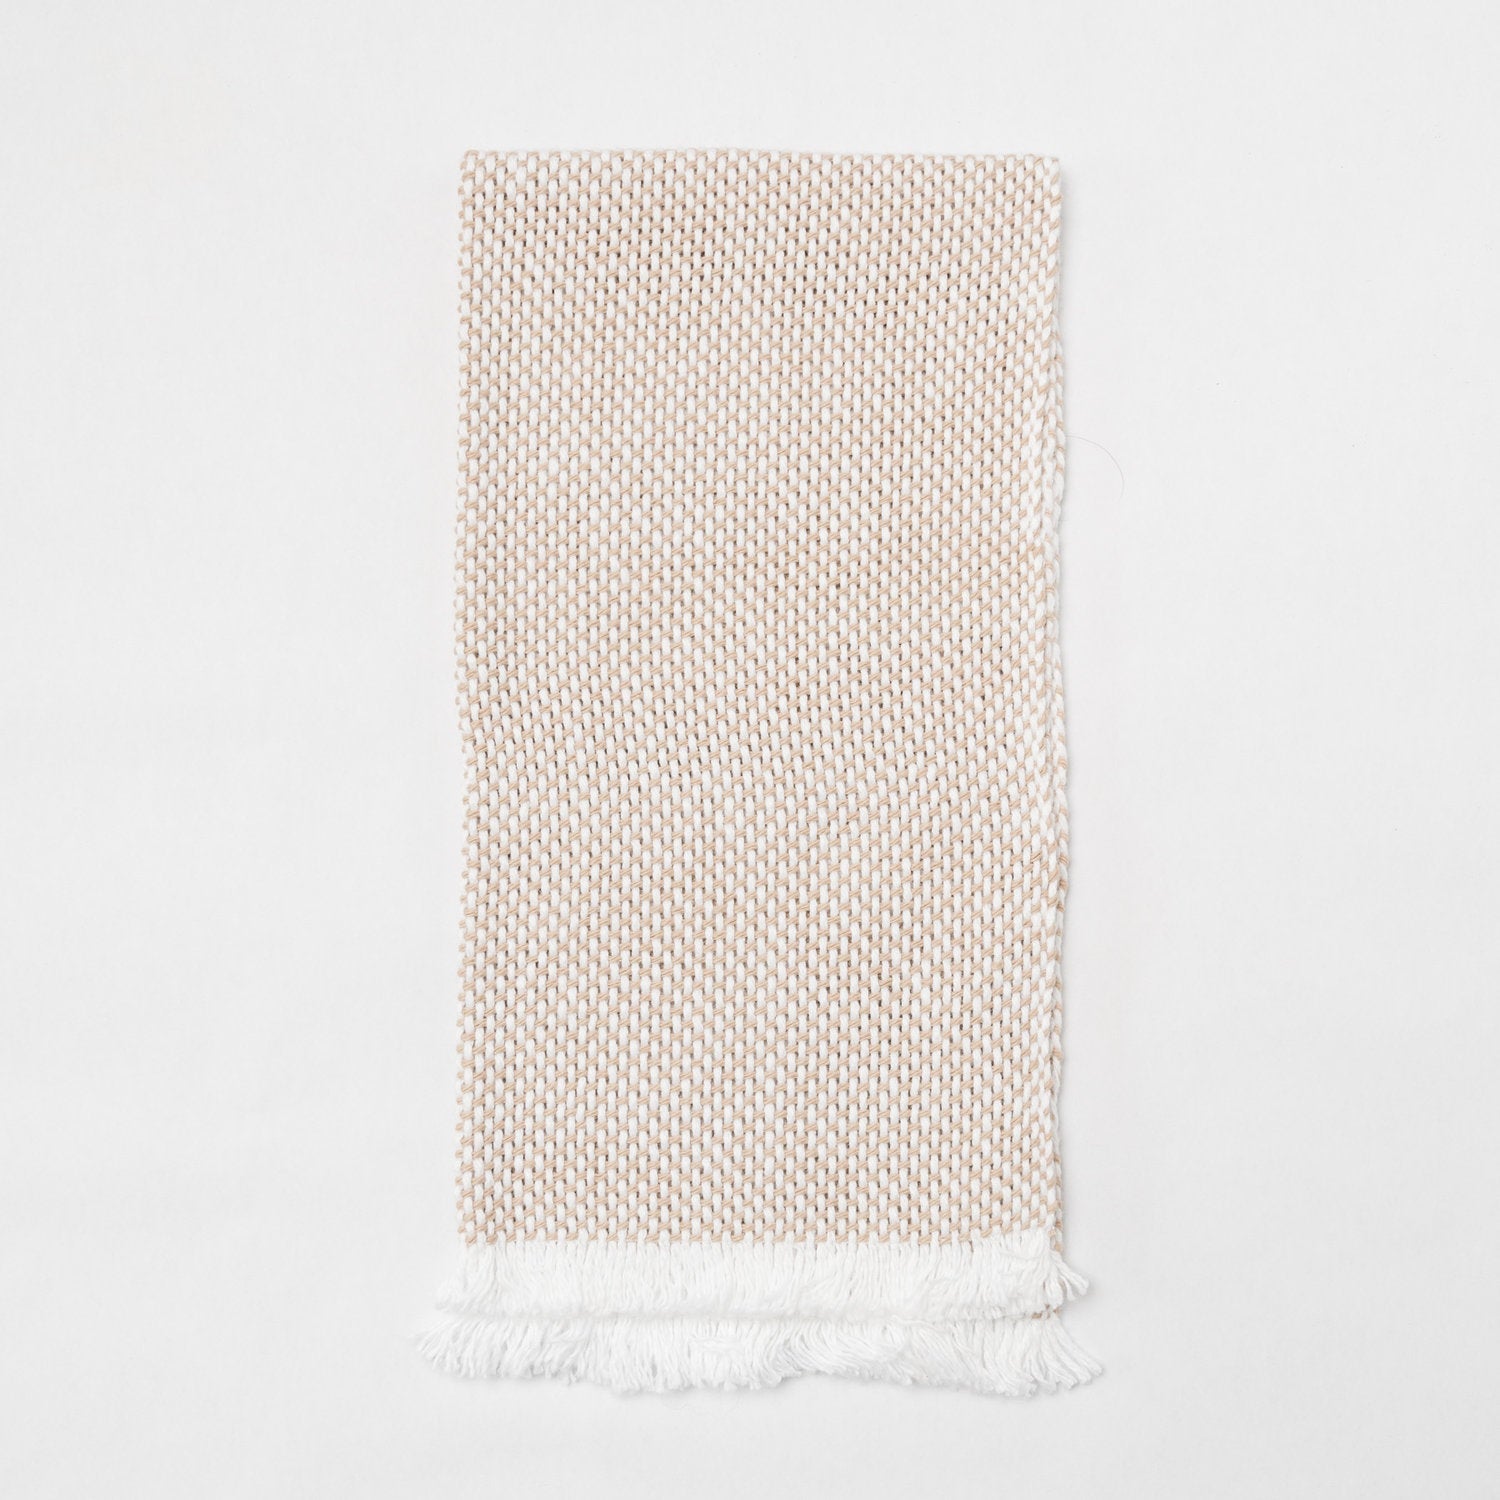 KD Weave Tan + White Hand Towel, Set of 2